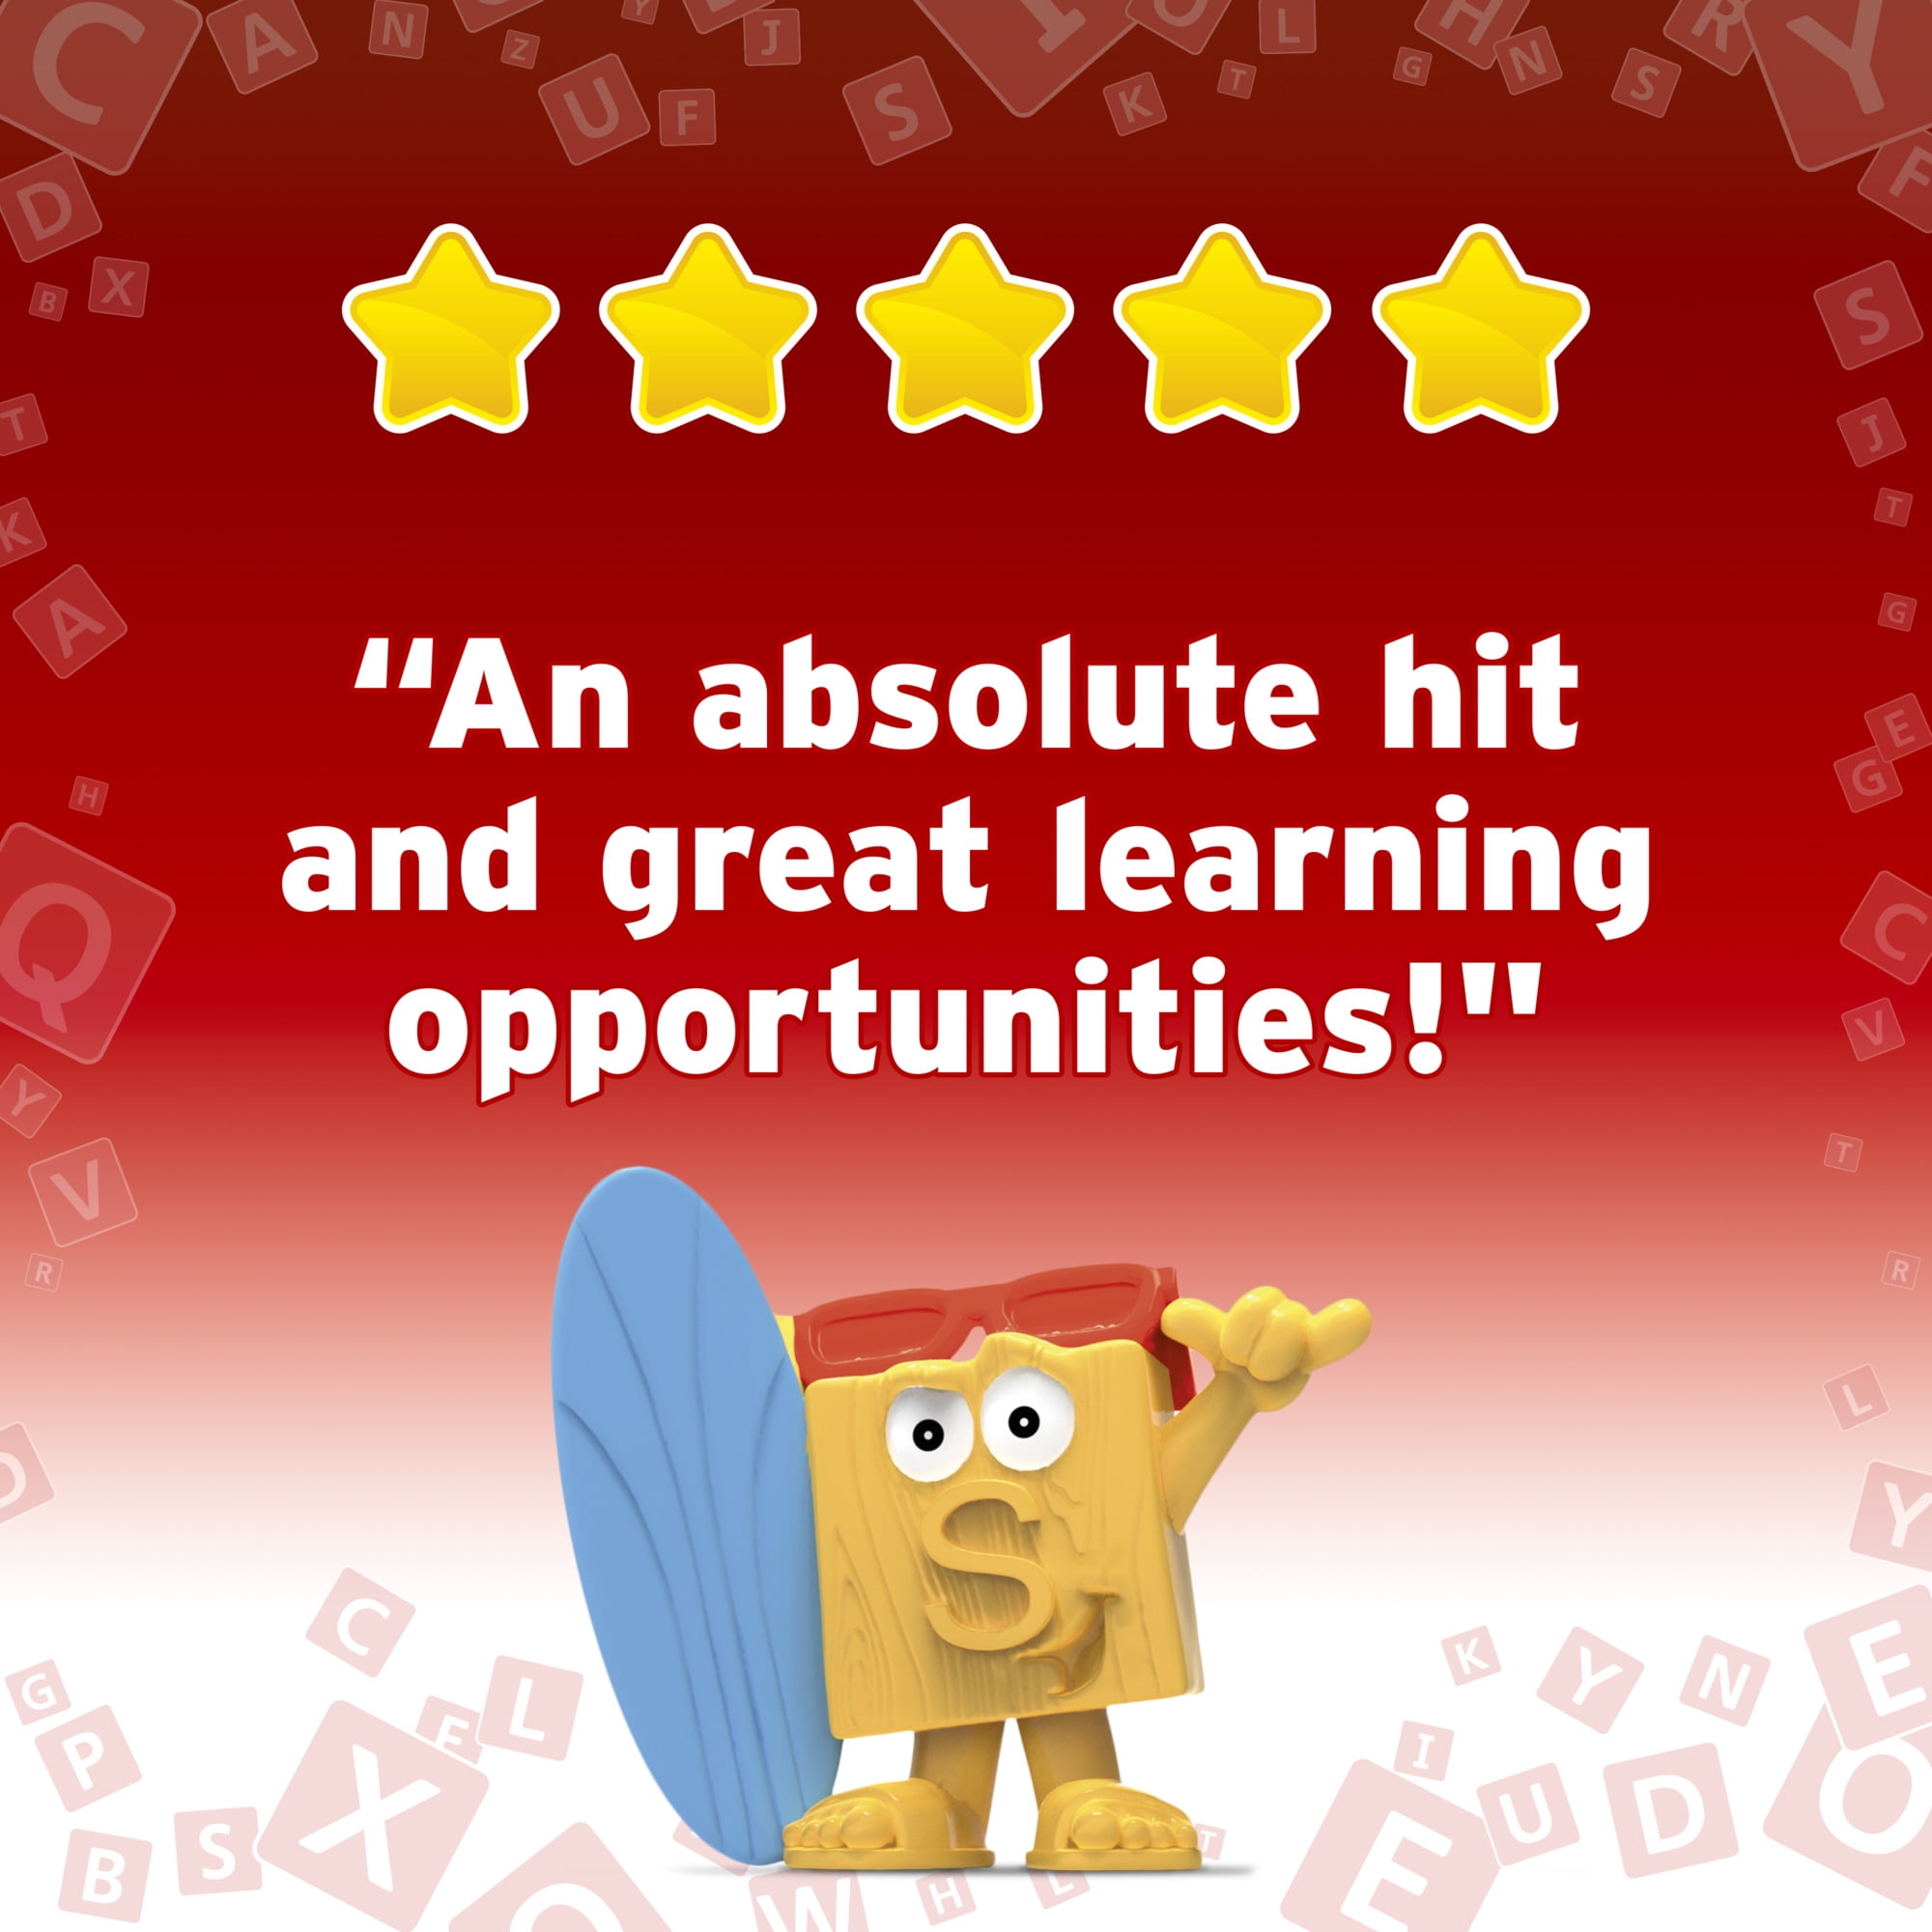 Scrabble Junior on the App Store